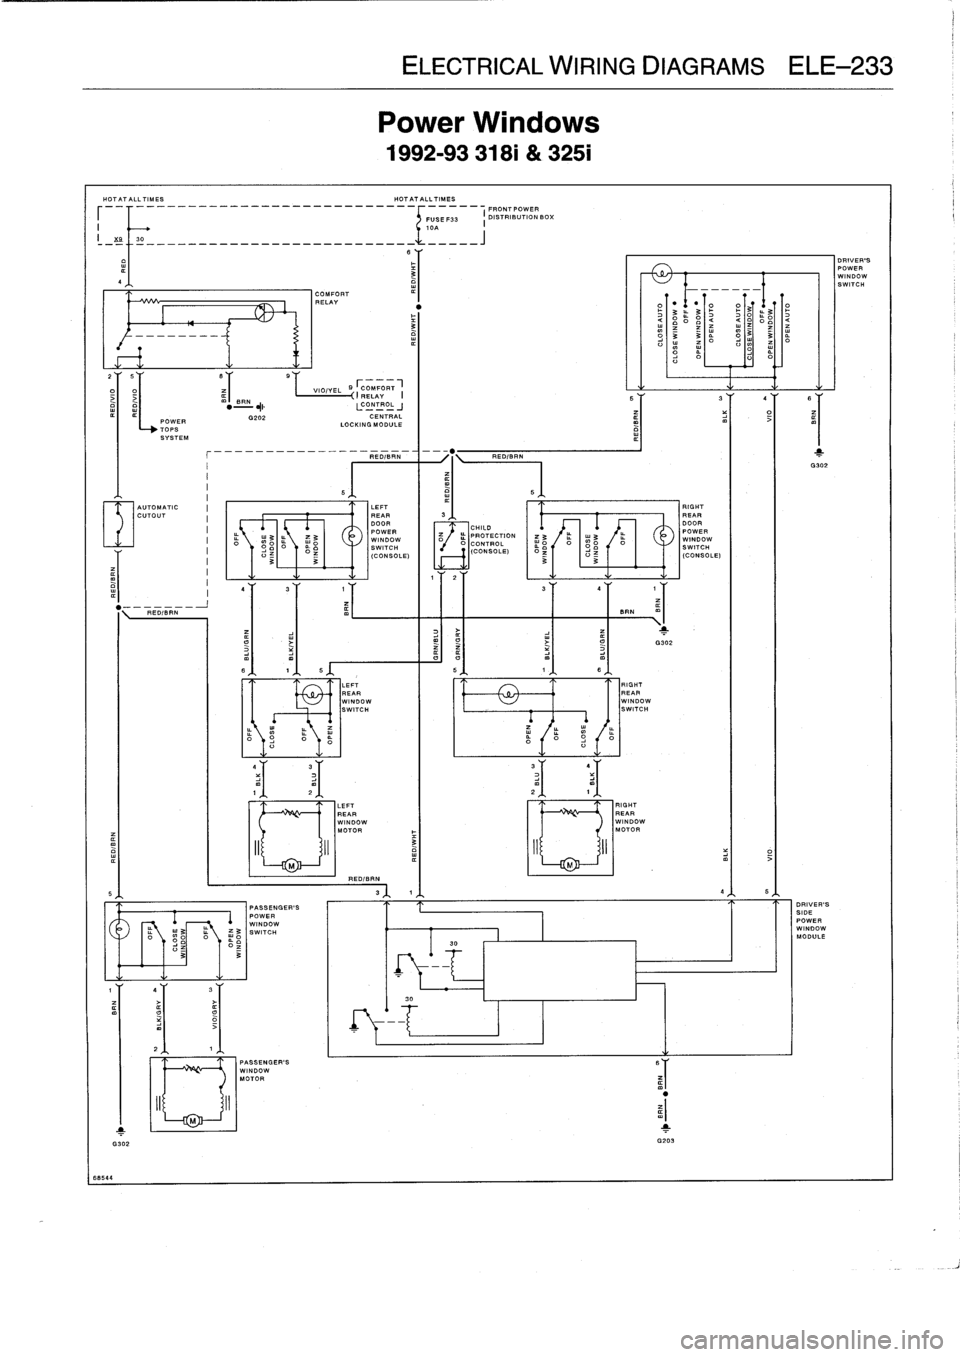 BMW 328i 1994 E36 Workshop Manual 
HO7A7AlL71ME5

	

HOTATALLTIMES

r
--

68544

i

*---AAA
POWER

AUTOMATIC
CUTOUT

O

PASSENGERS
WINDOWMOTOR

V
1
G3D2

B
r
COMFDRT~
VIOIYEL
(IRELAY
I

ELECTRICAL
WIRING
DIAGRAMS
ELE-233

Power
Windo